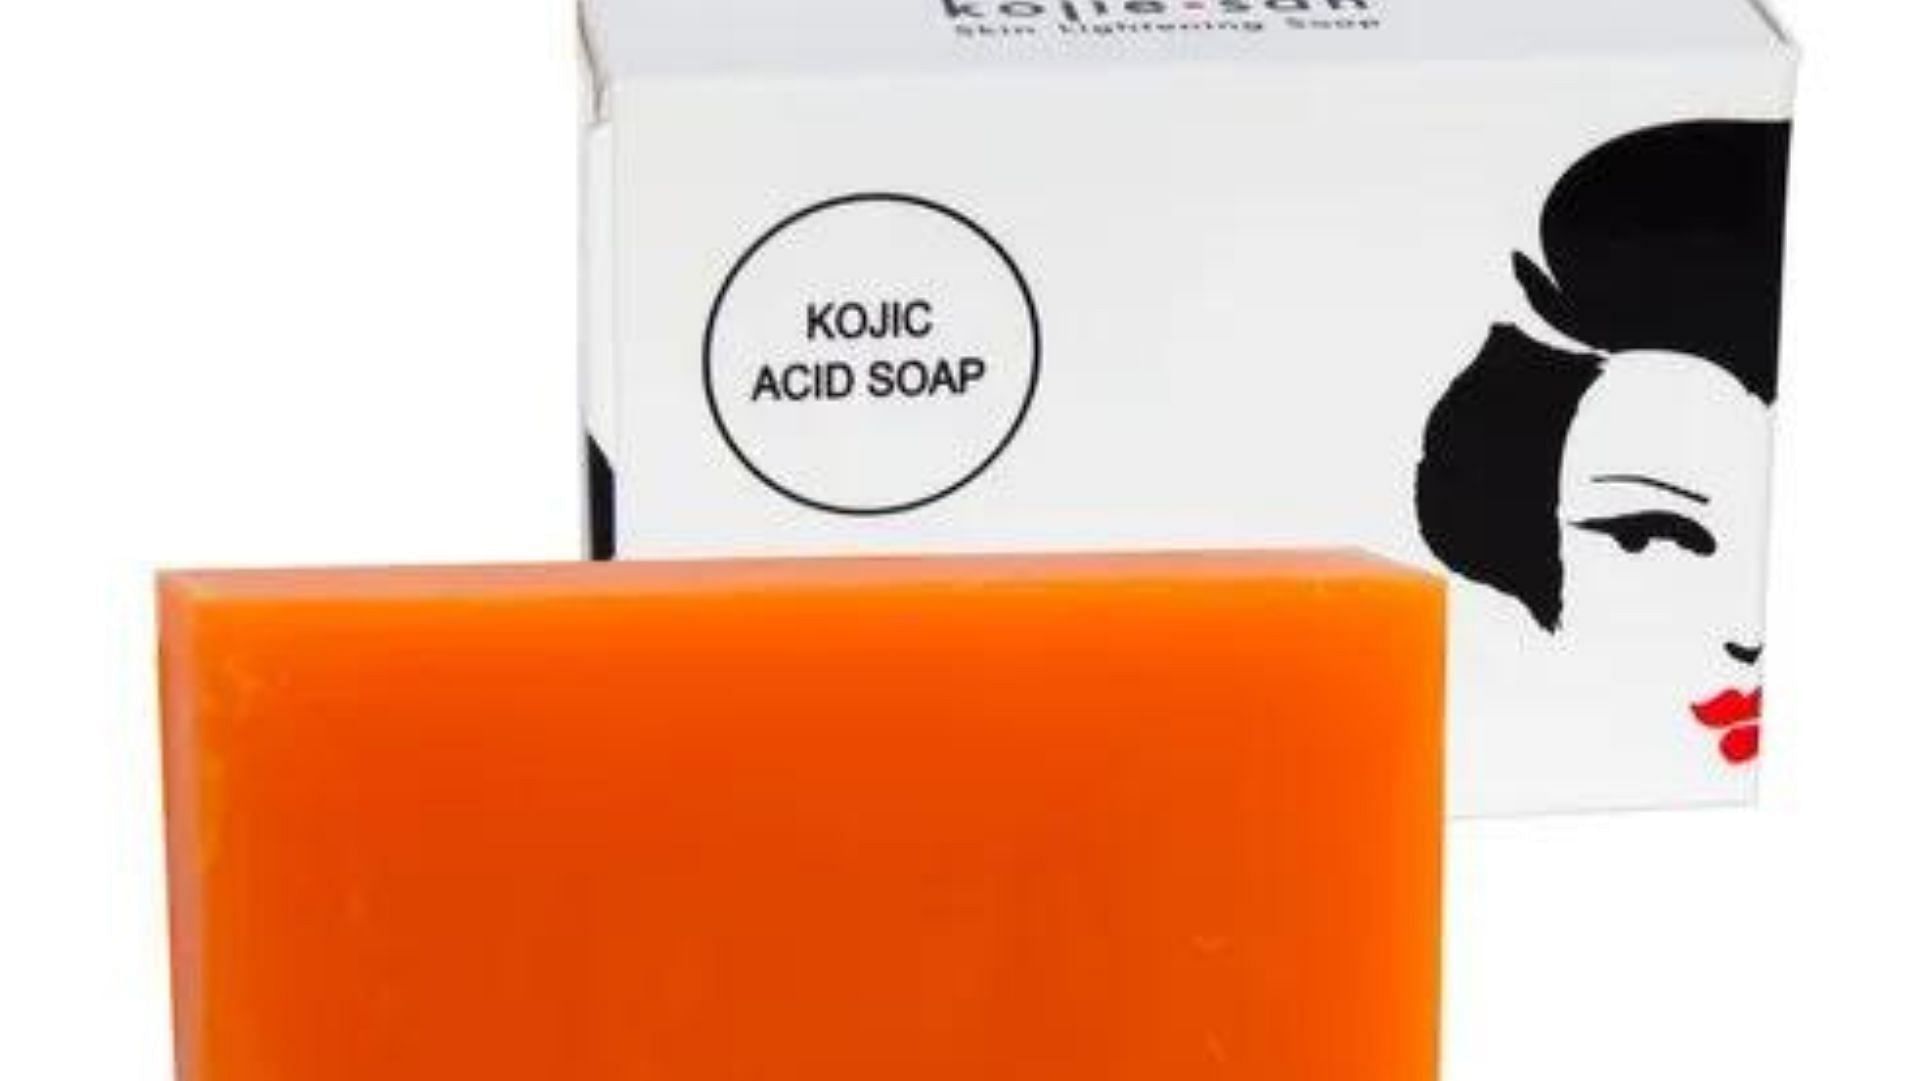 Kojic acid soap (Photo via Google)